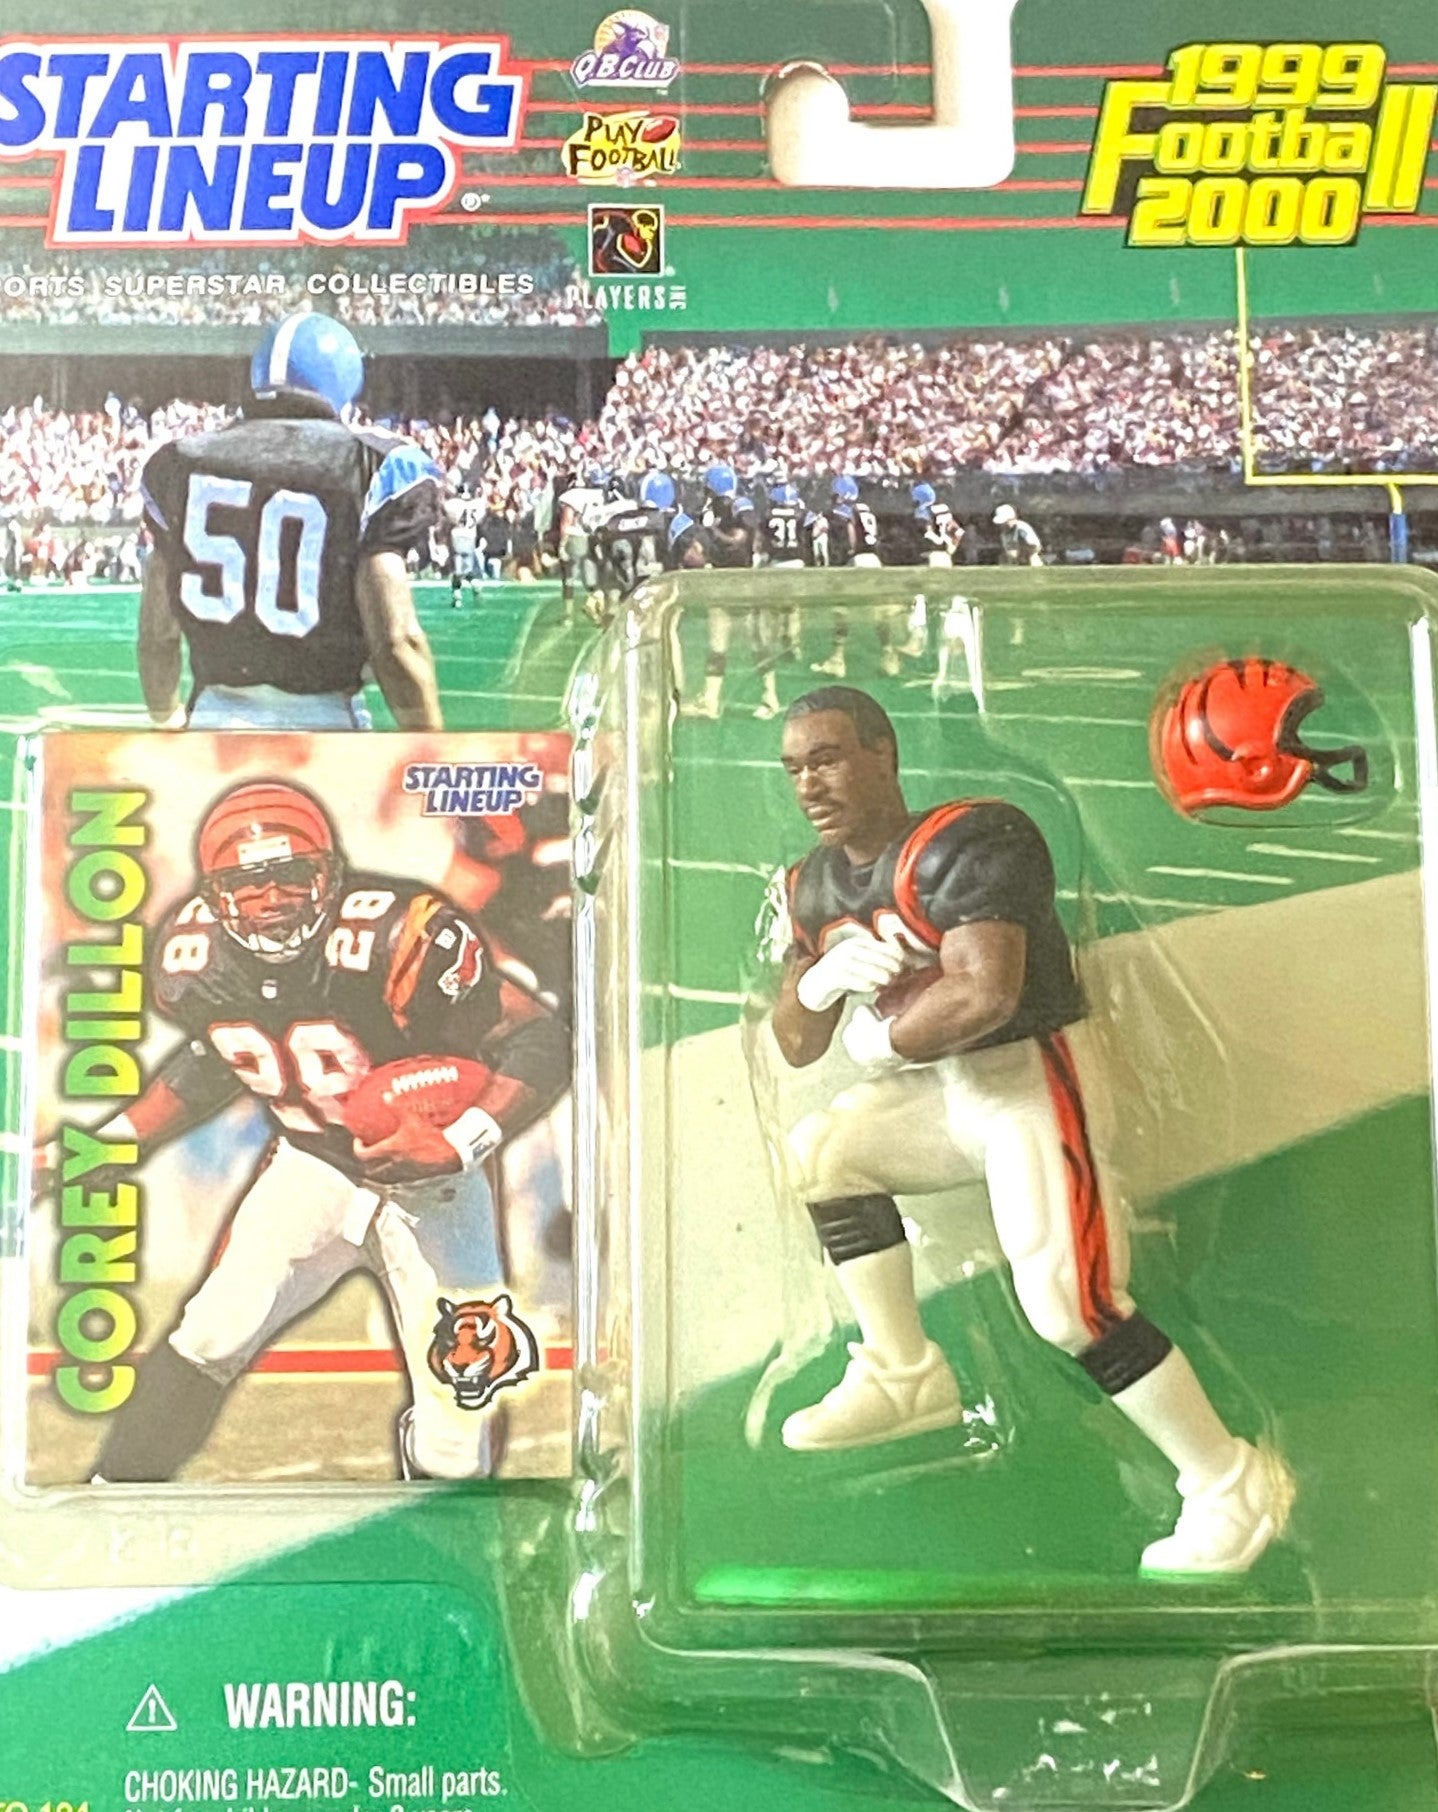 Corey Dillon 1999-2000 NFL Cincinnati Bengals Starting Lineup Figurine (New) by Hasbro